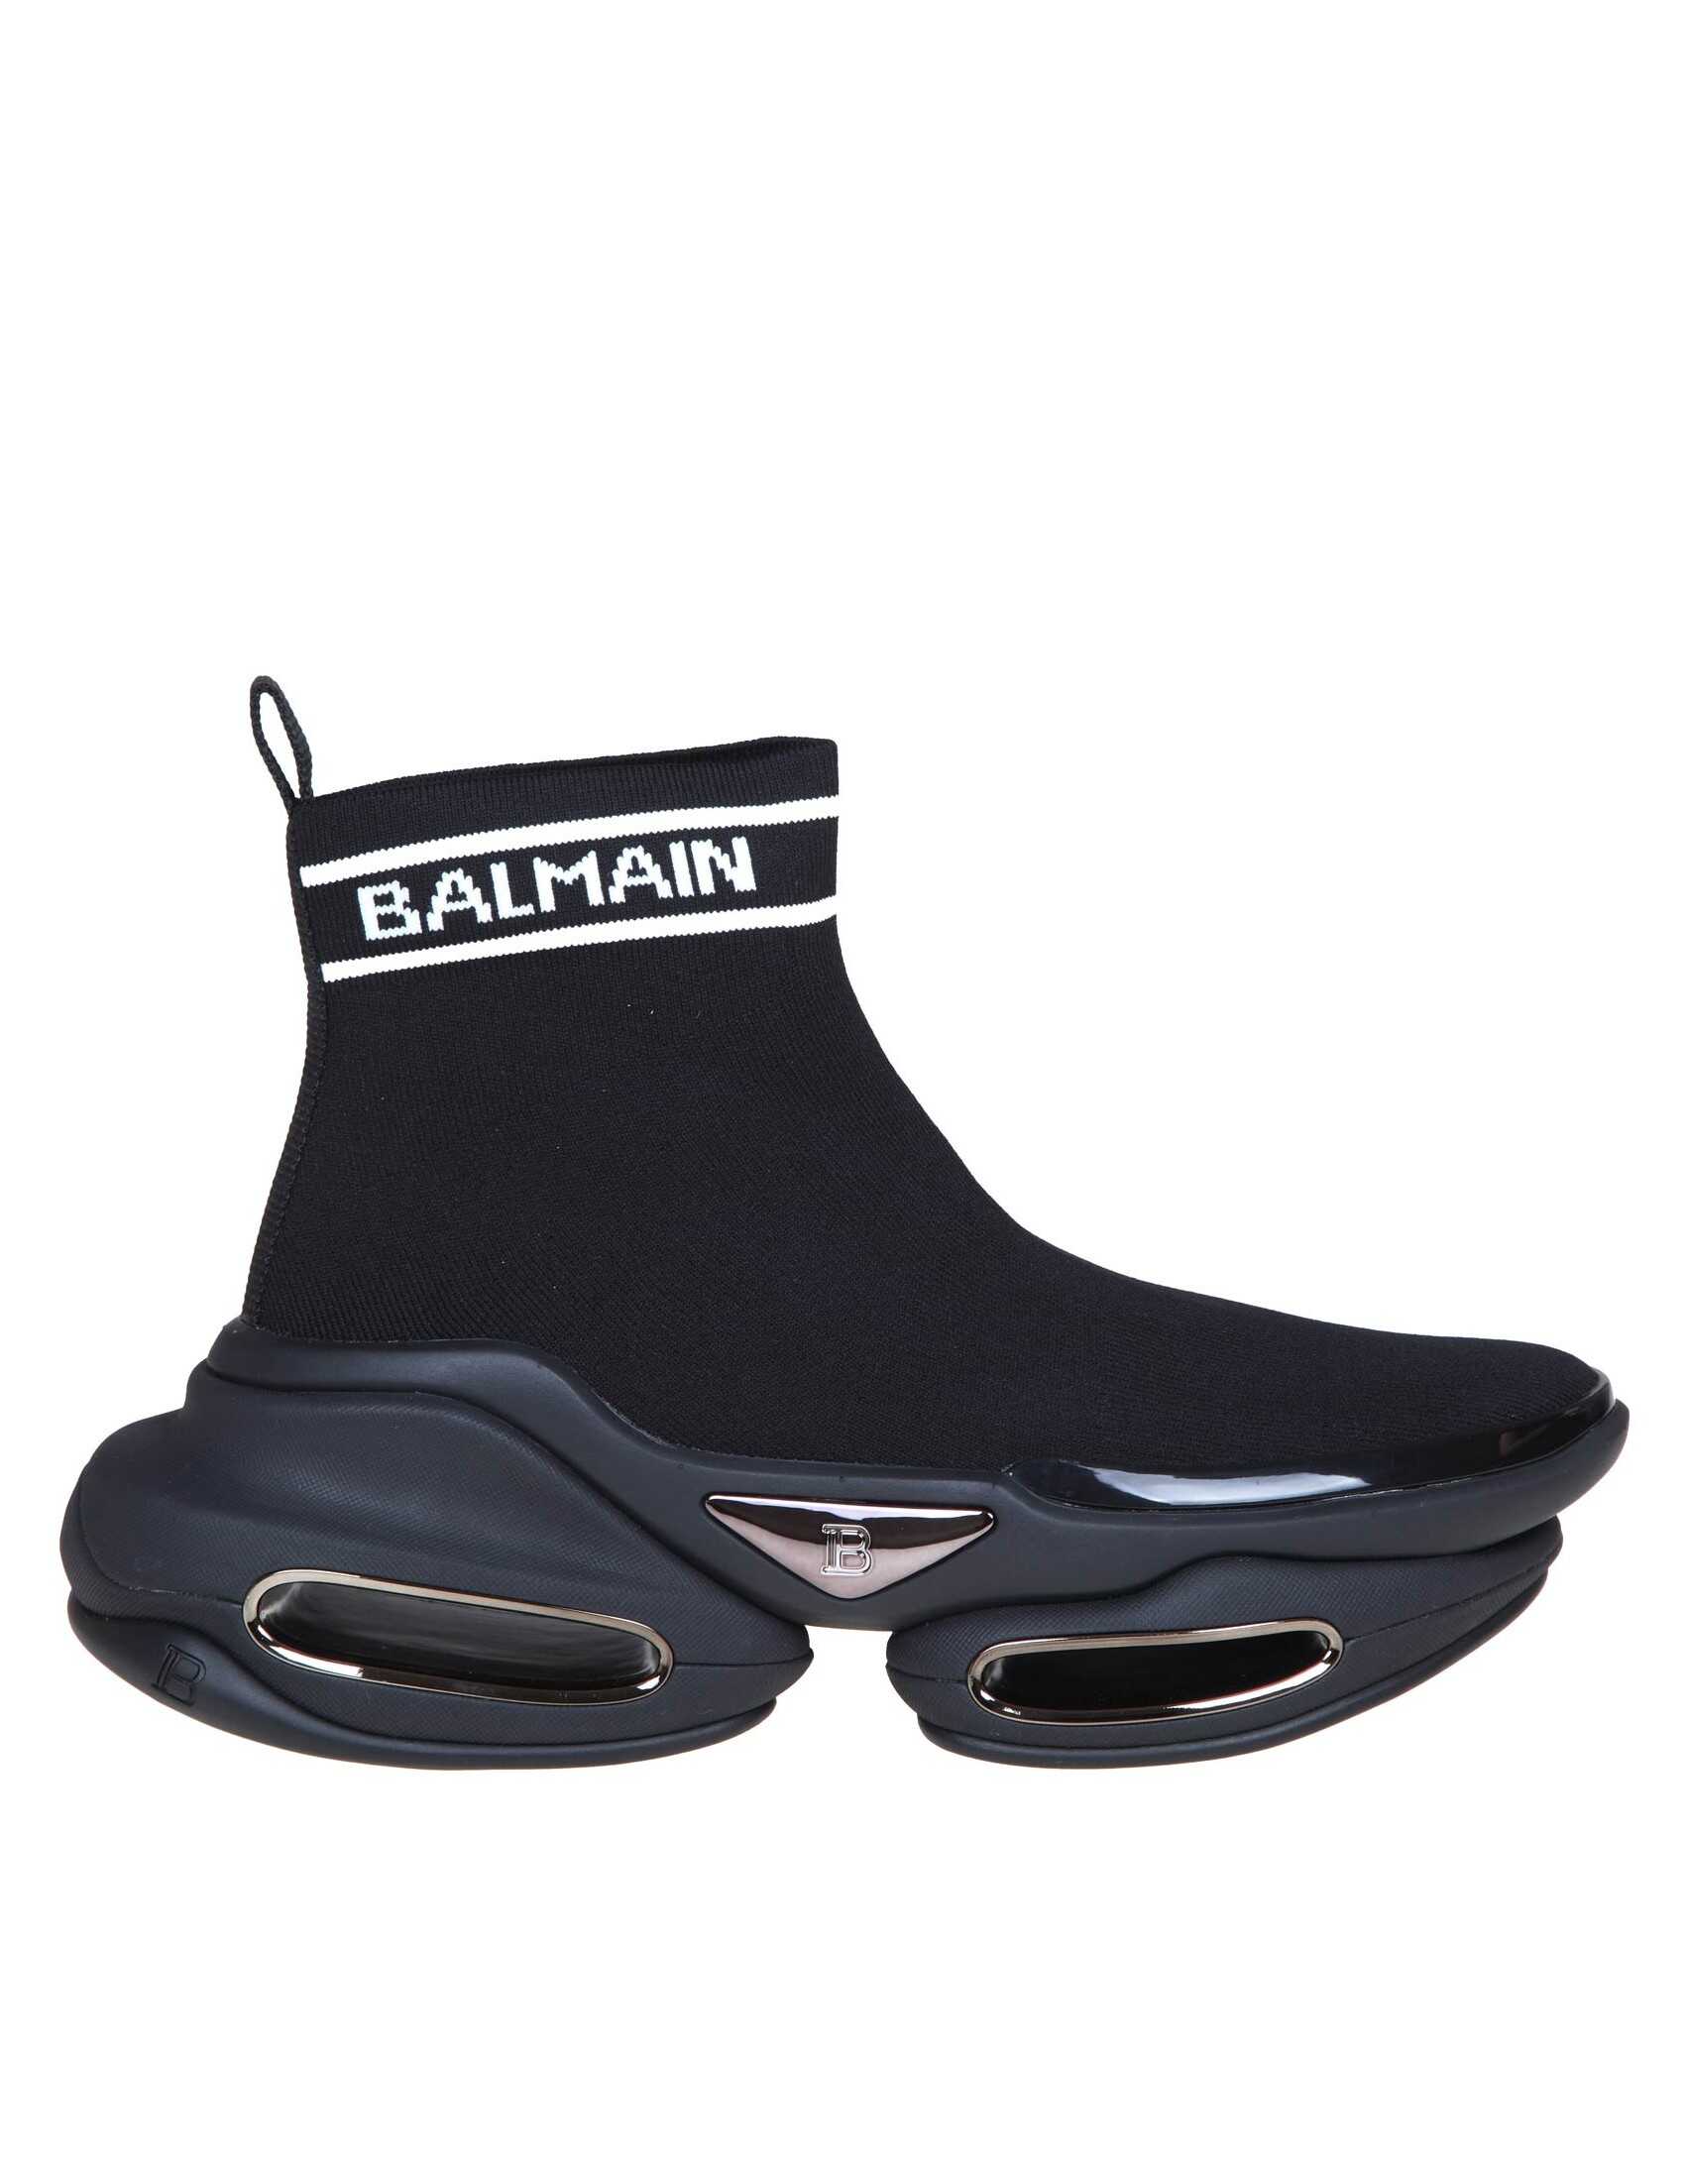 Balmain Balmain socket b-bold in black technical fabric Black